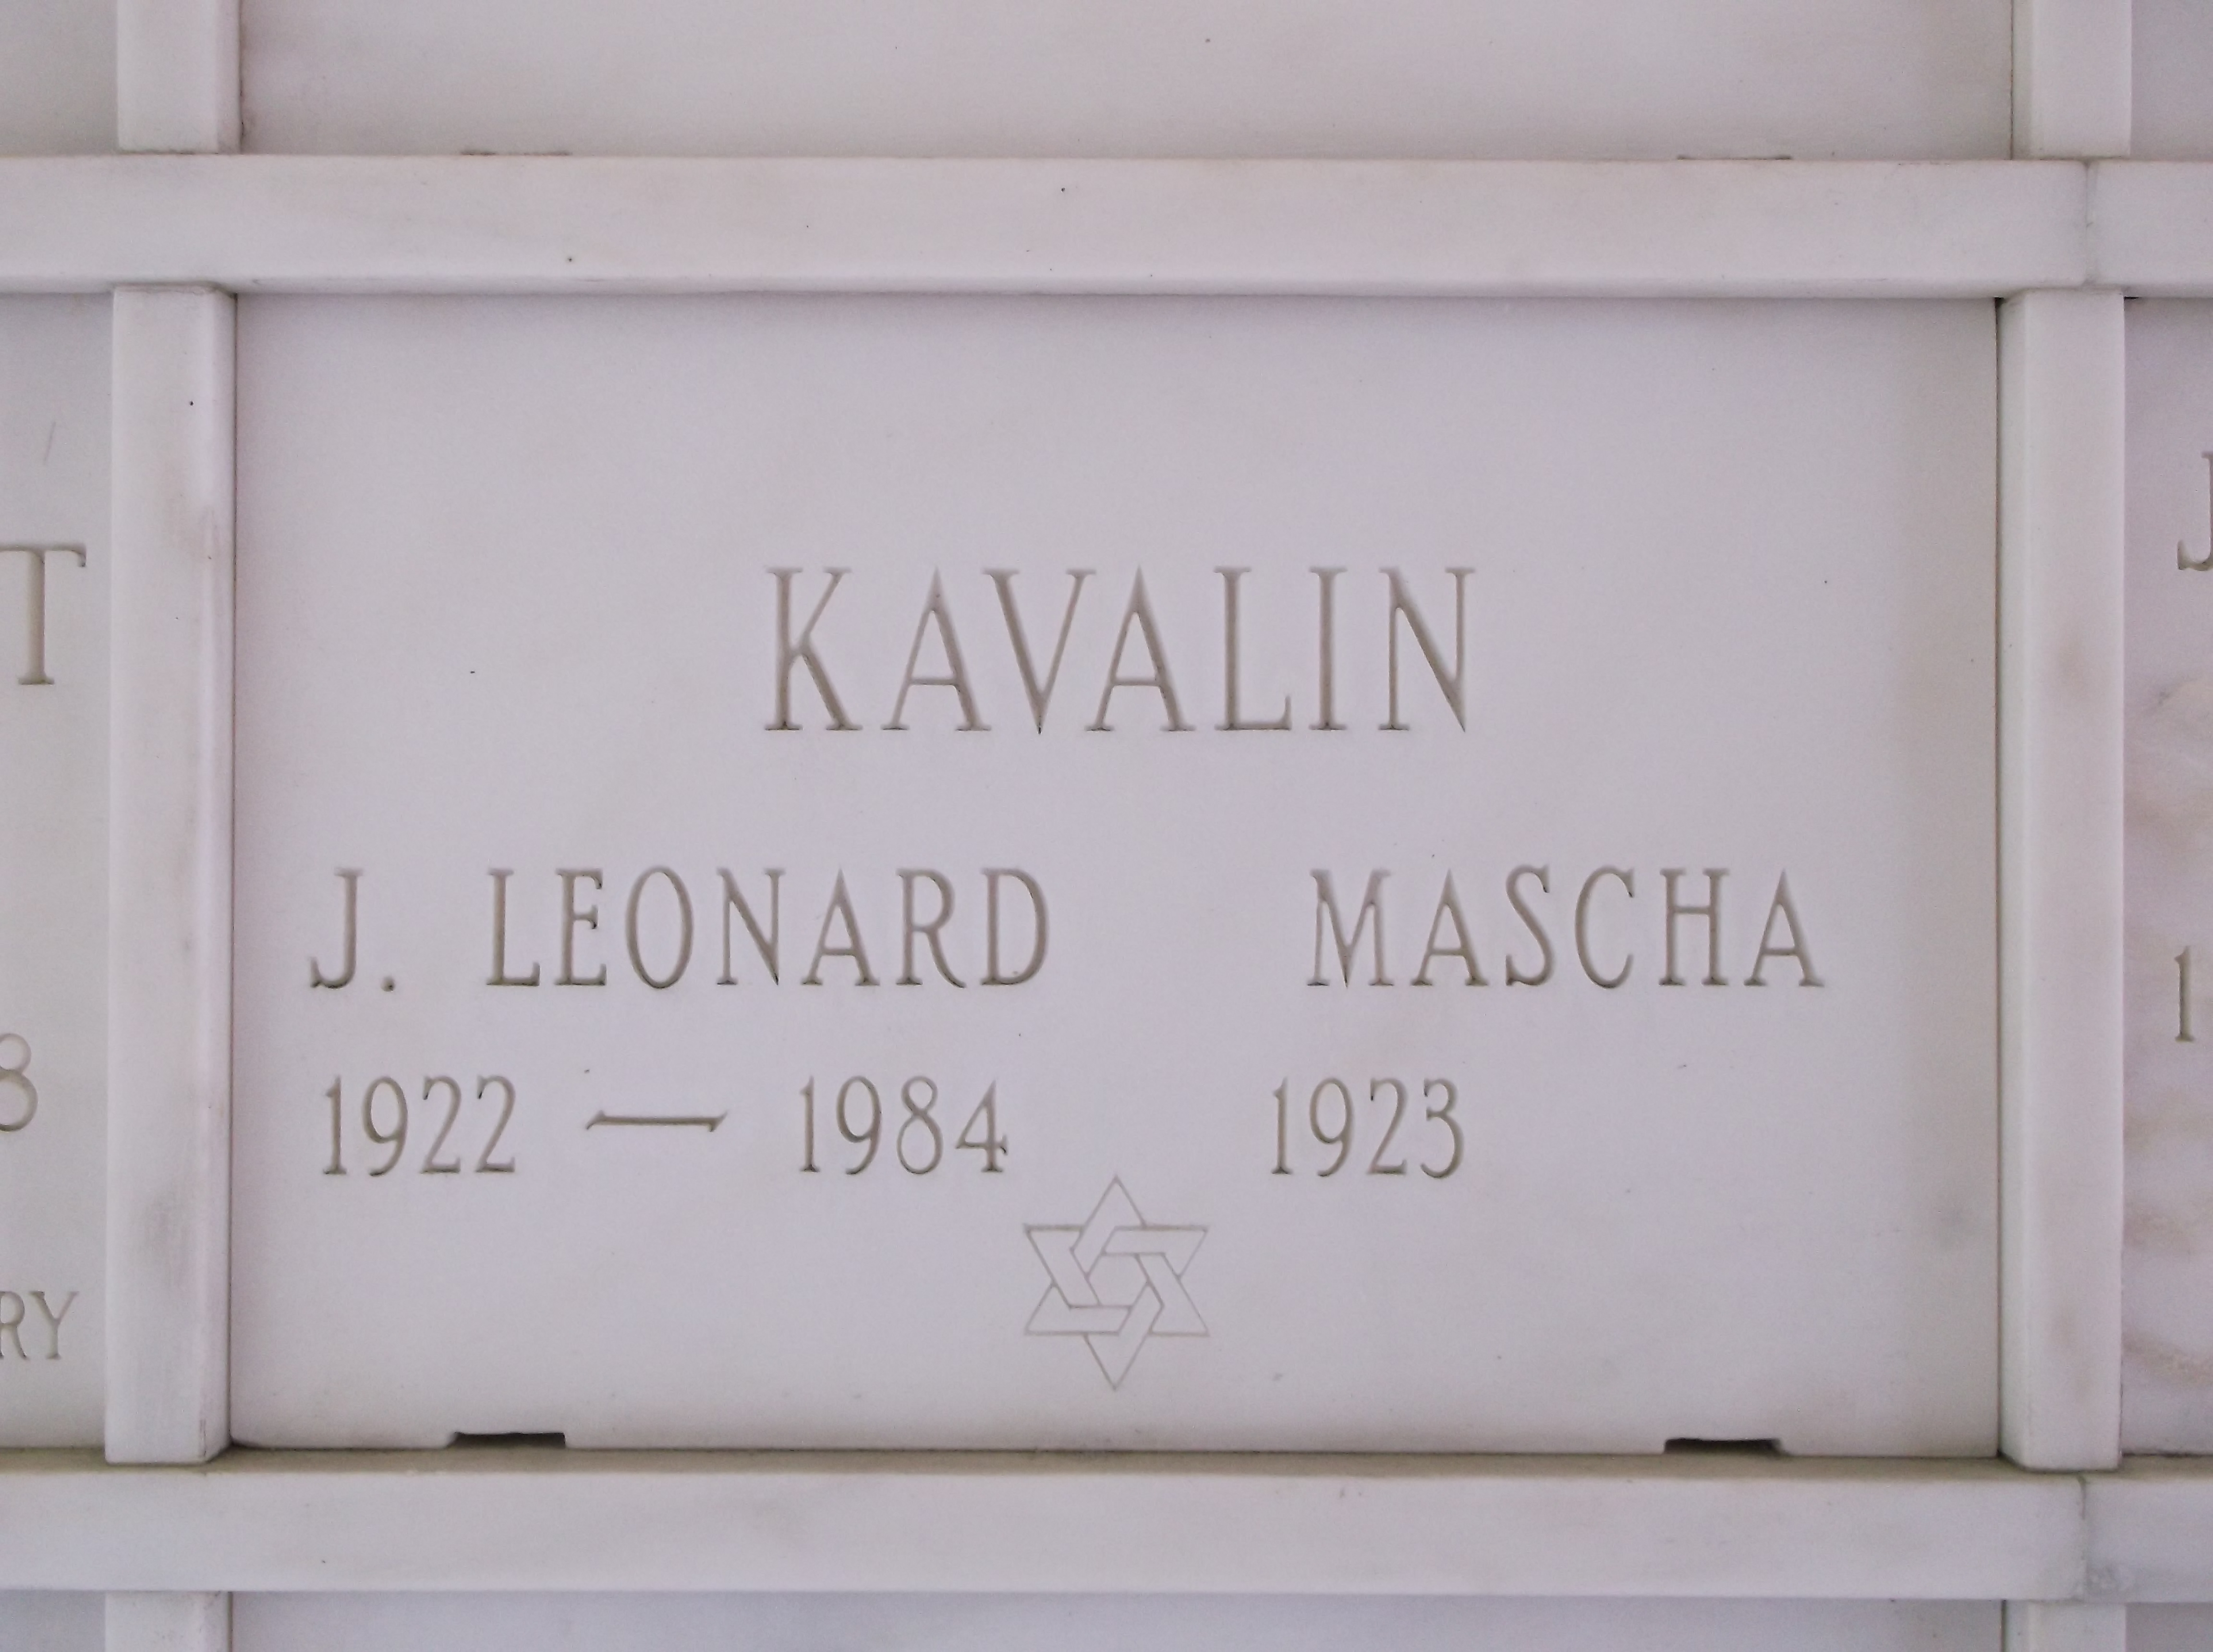 Mascha Kavalin